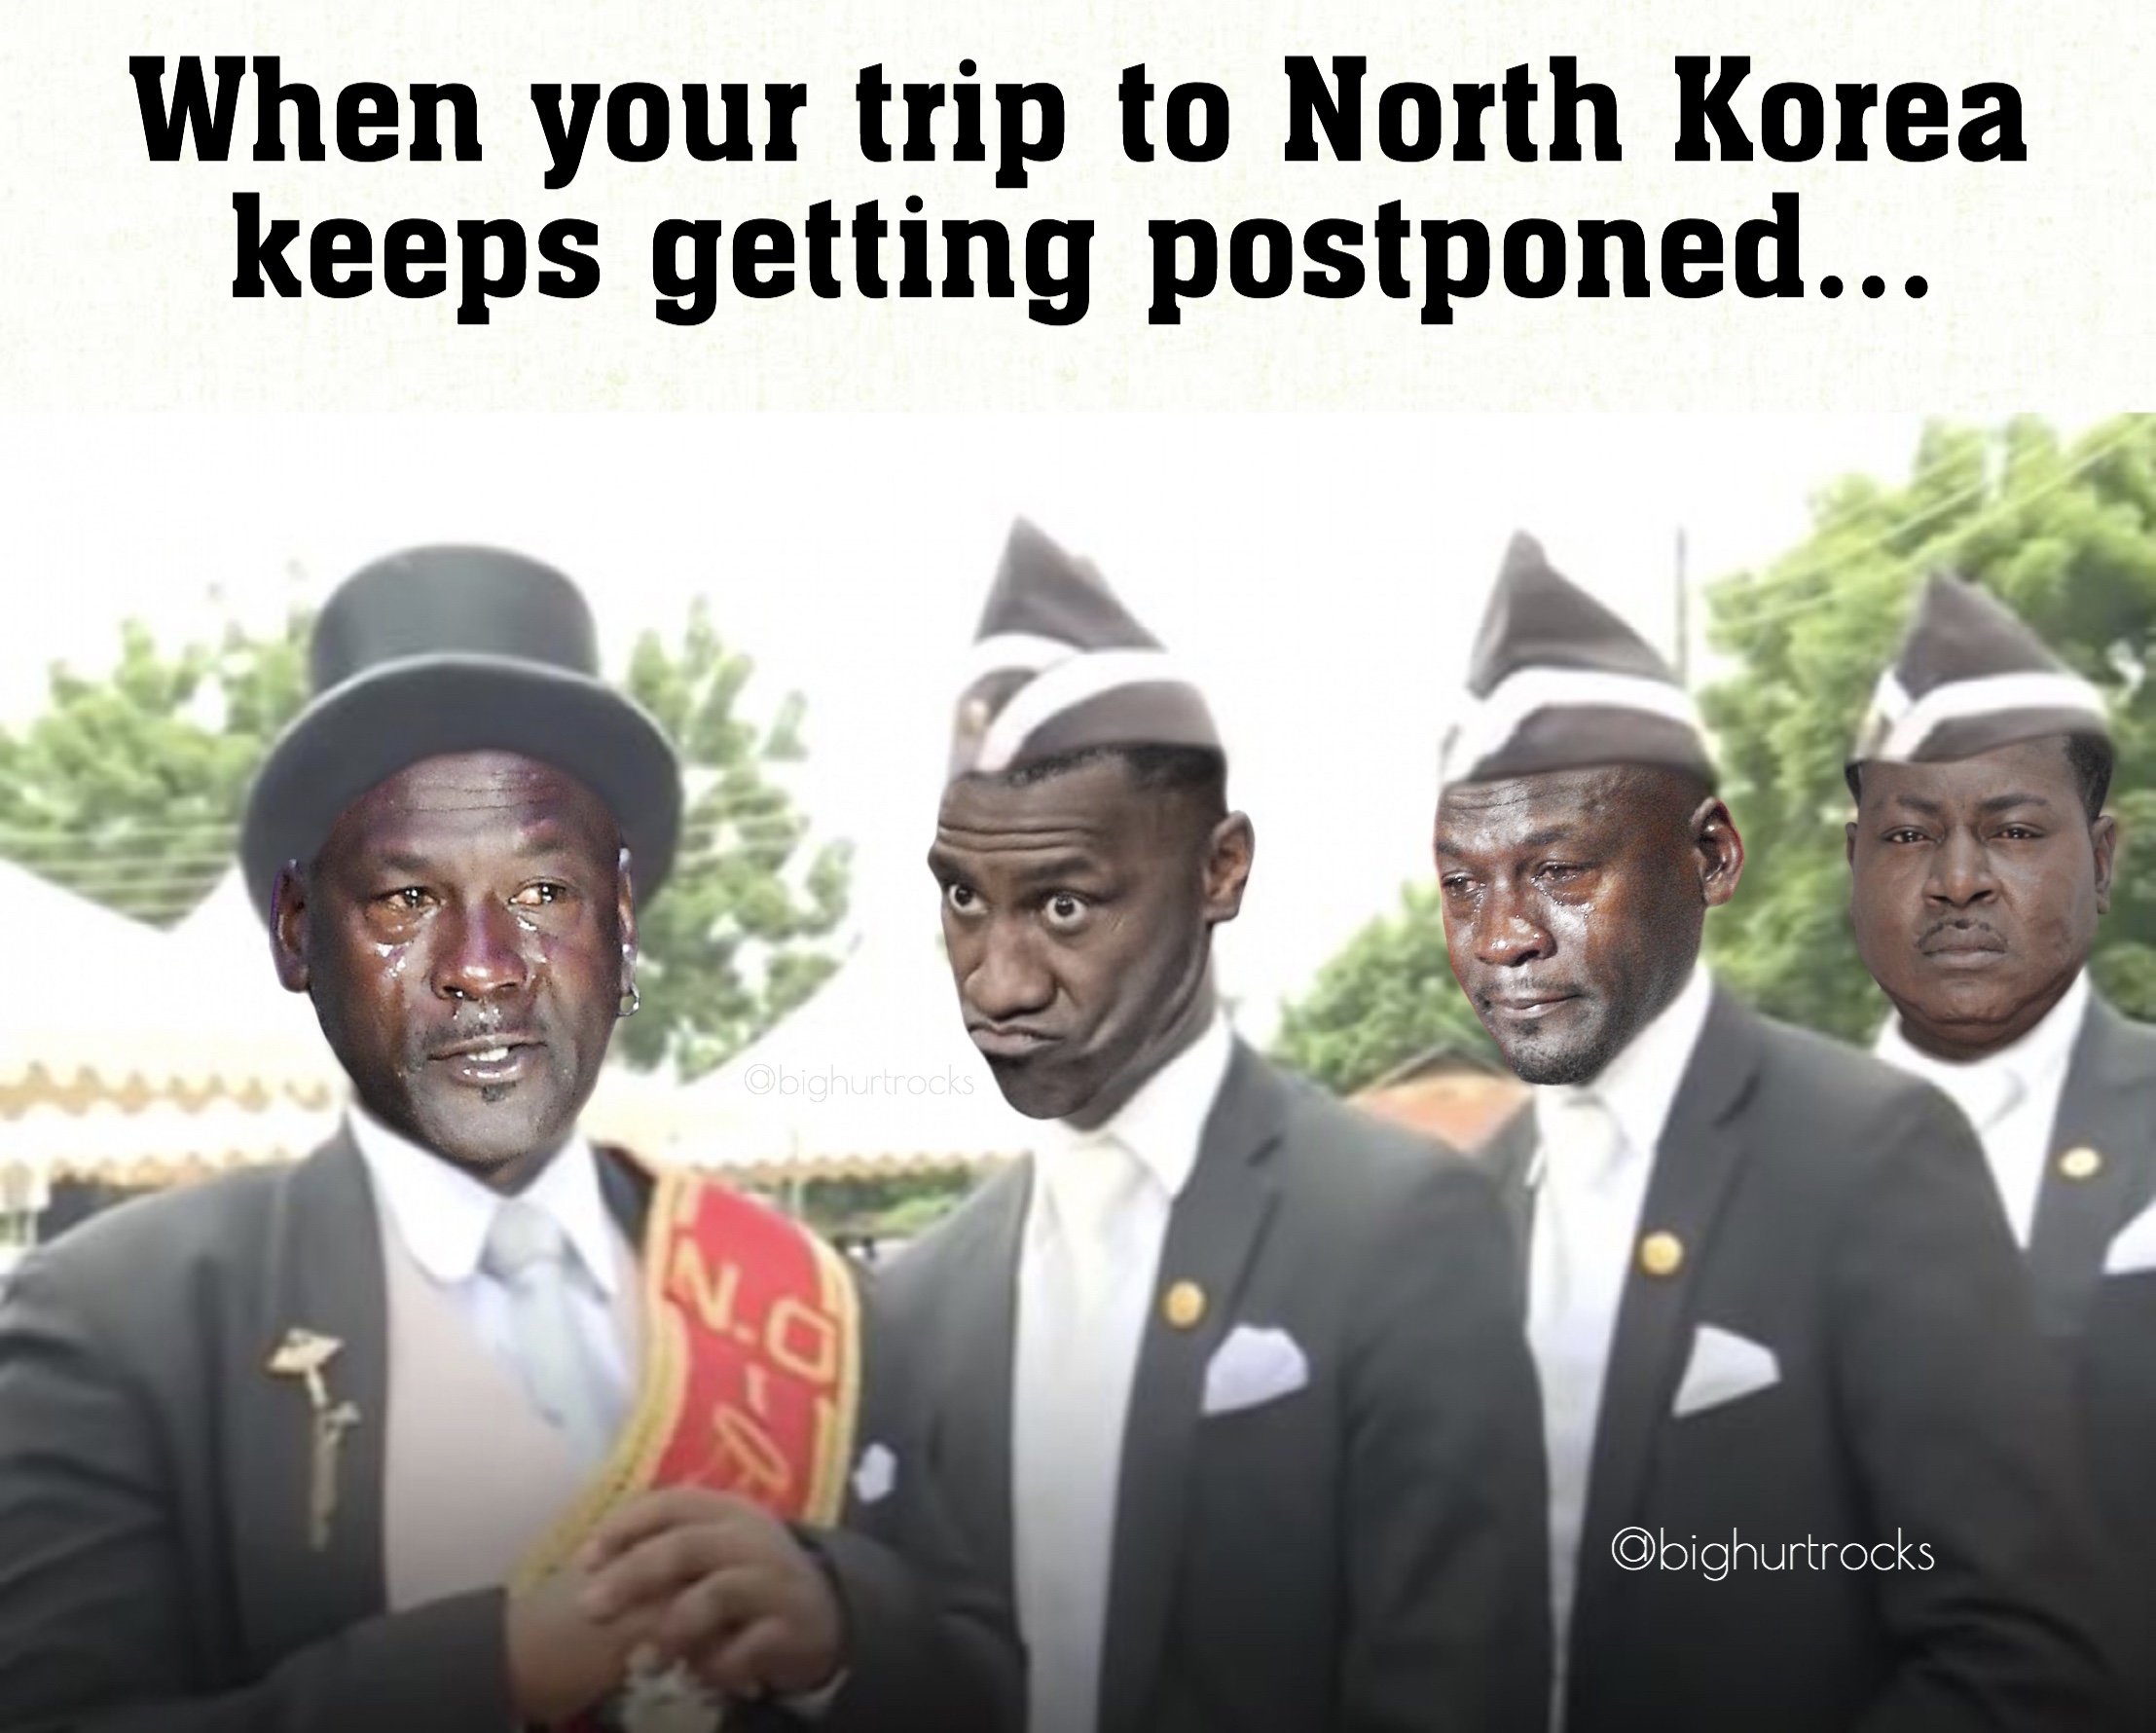 coffin dance - When your trip to North Korea keeps getting postponed... Obighurtrocks